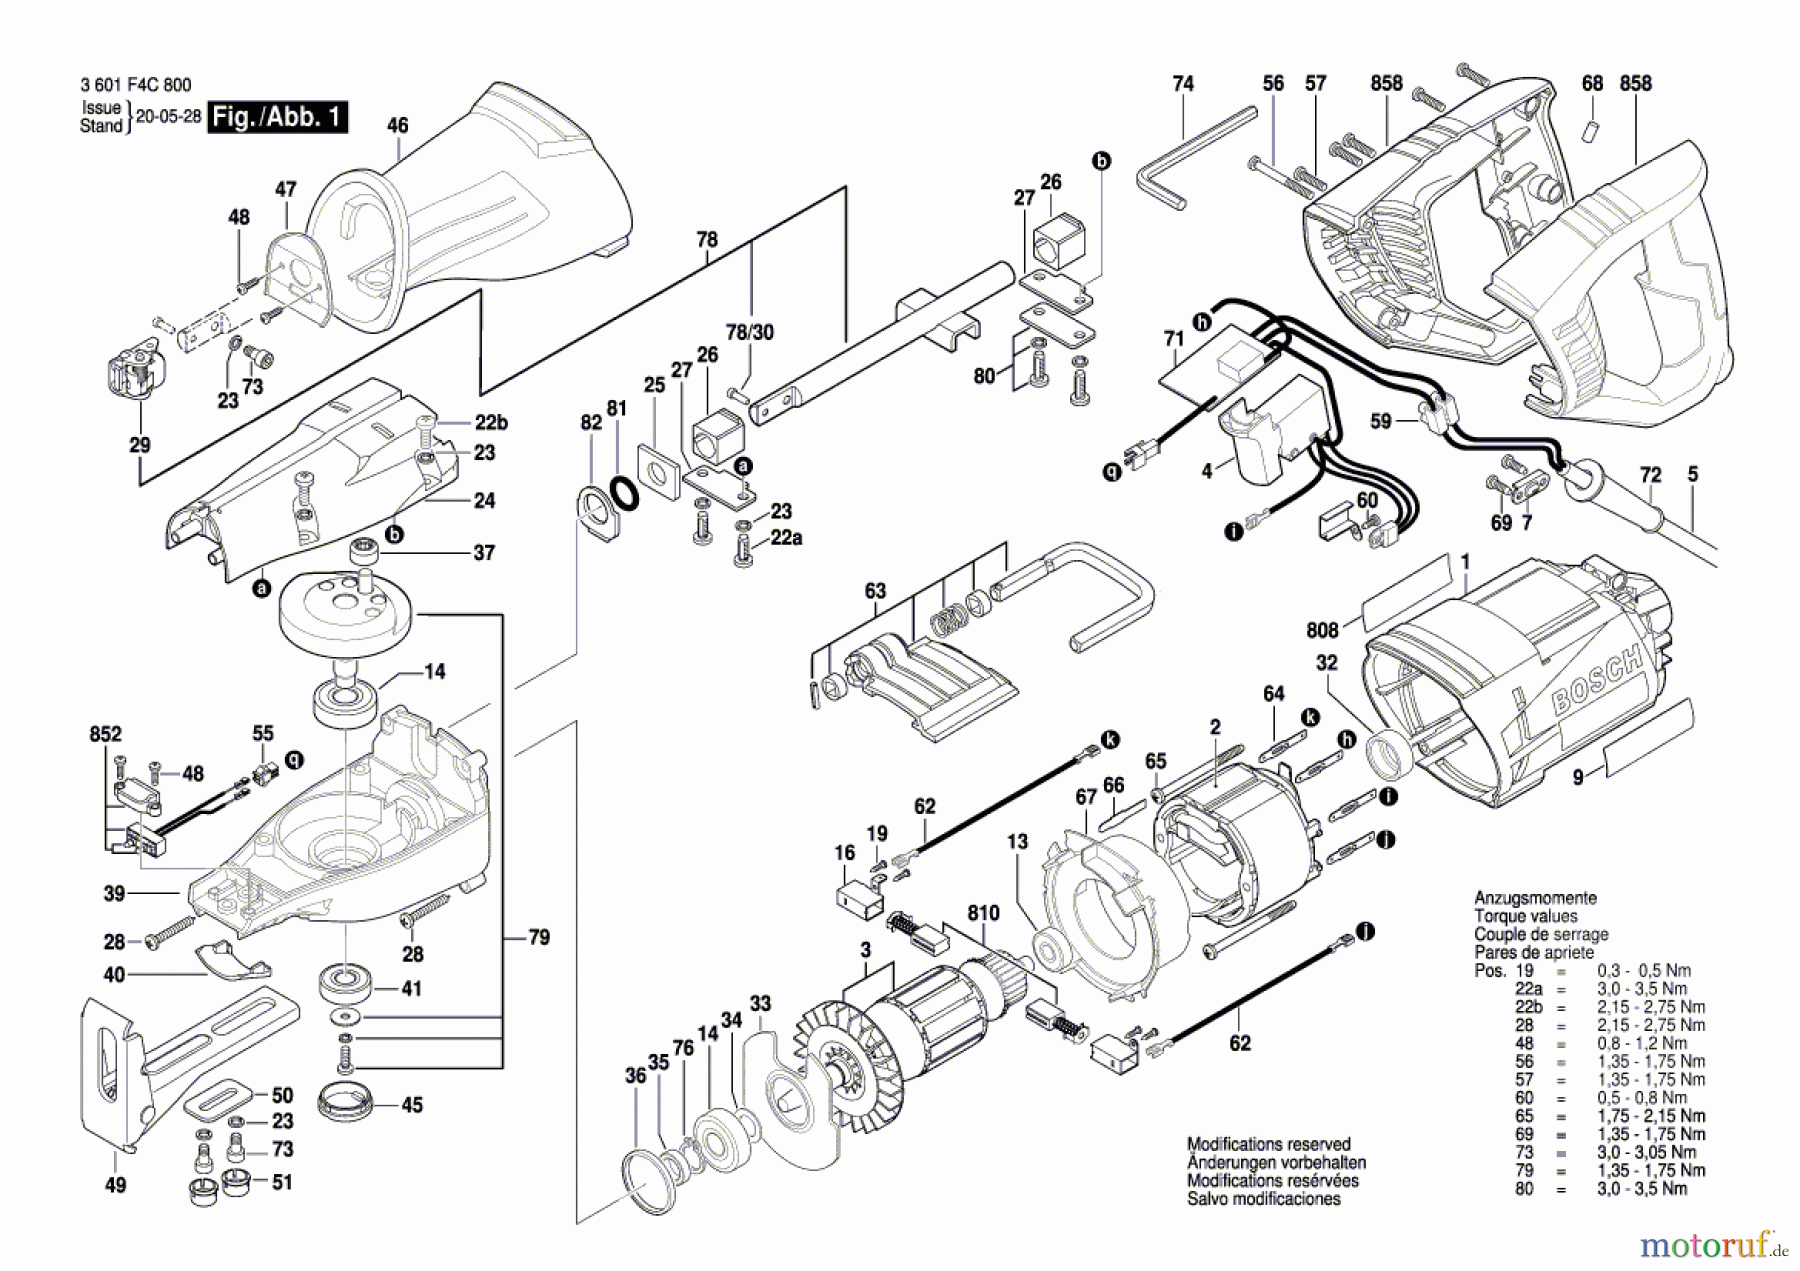  Bosch Werkzeug Säbelsäge GSA 1100 E Seite 1